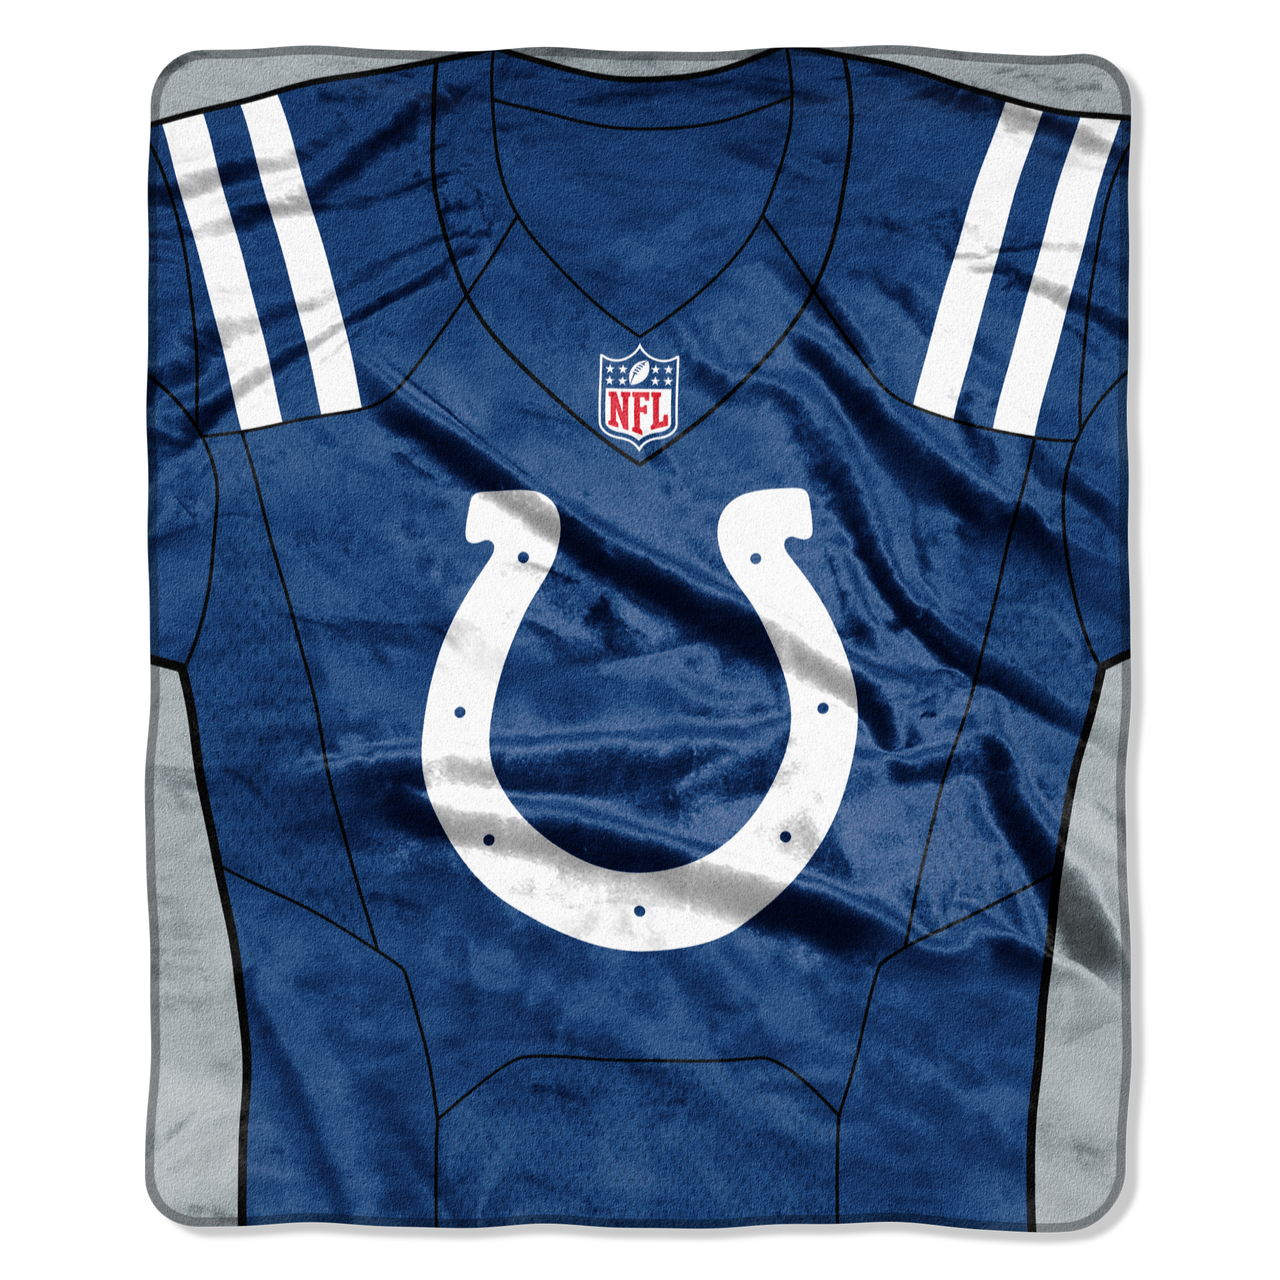 Indianapolis Colts Blanket 50x60 Raschel Jersey Design